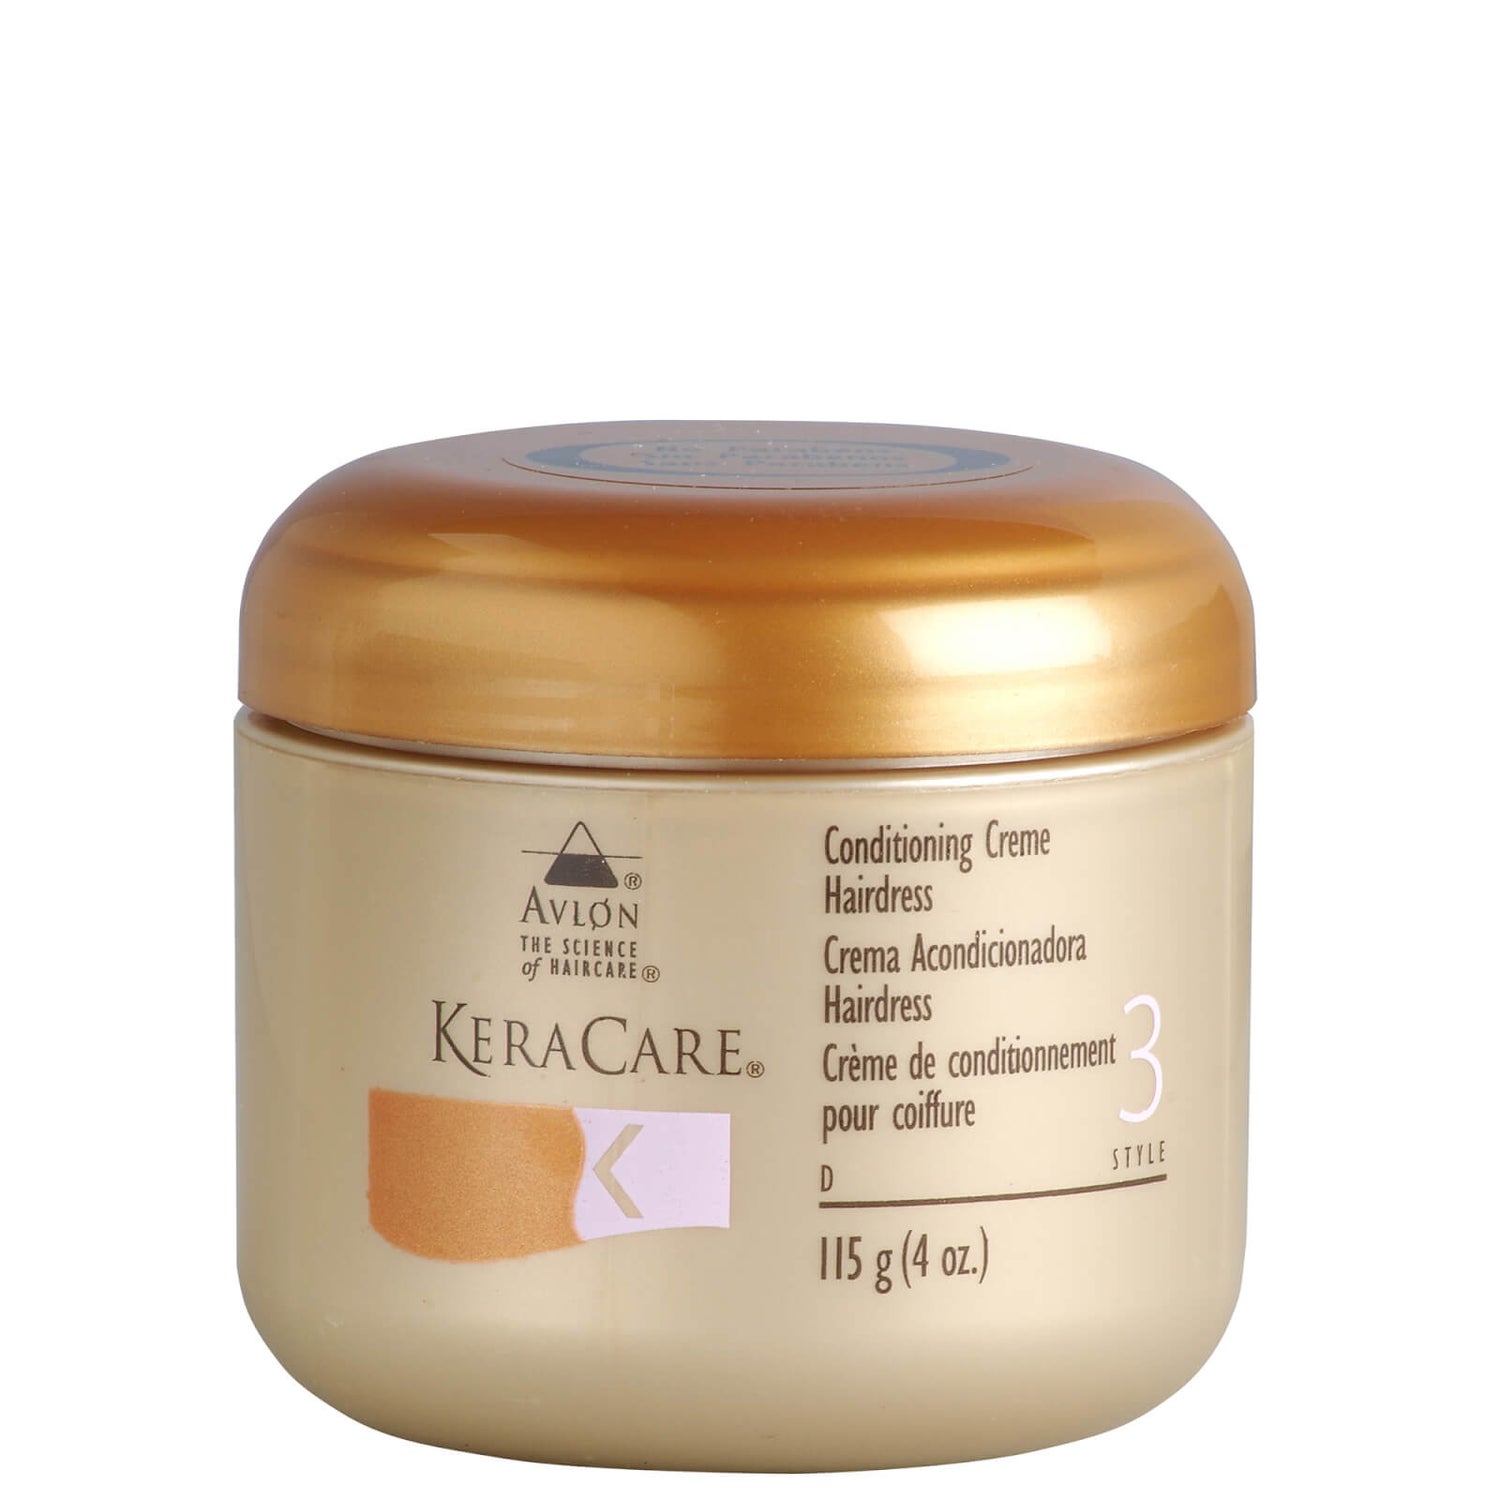 Crème Hairdress da KeraCare (115 g)